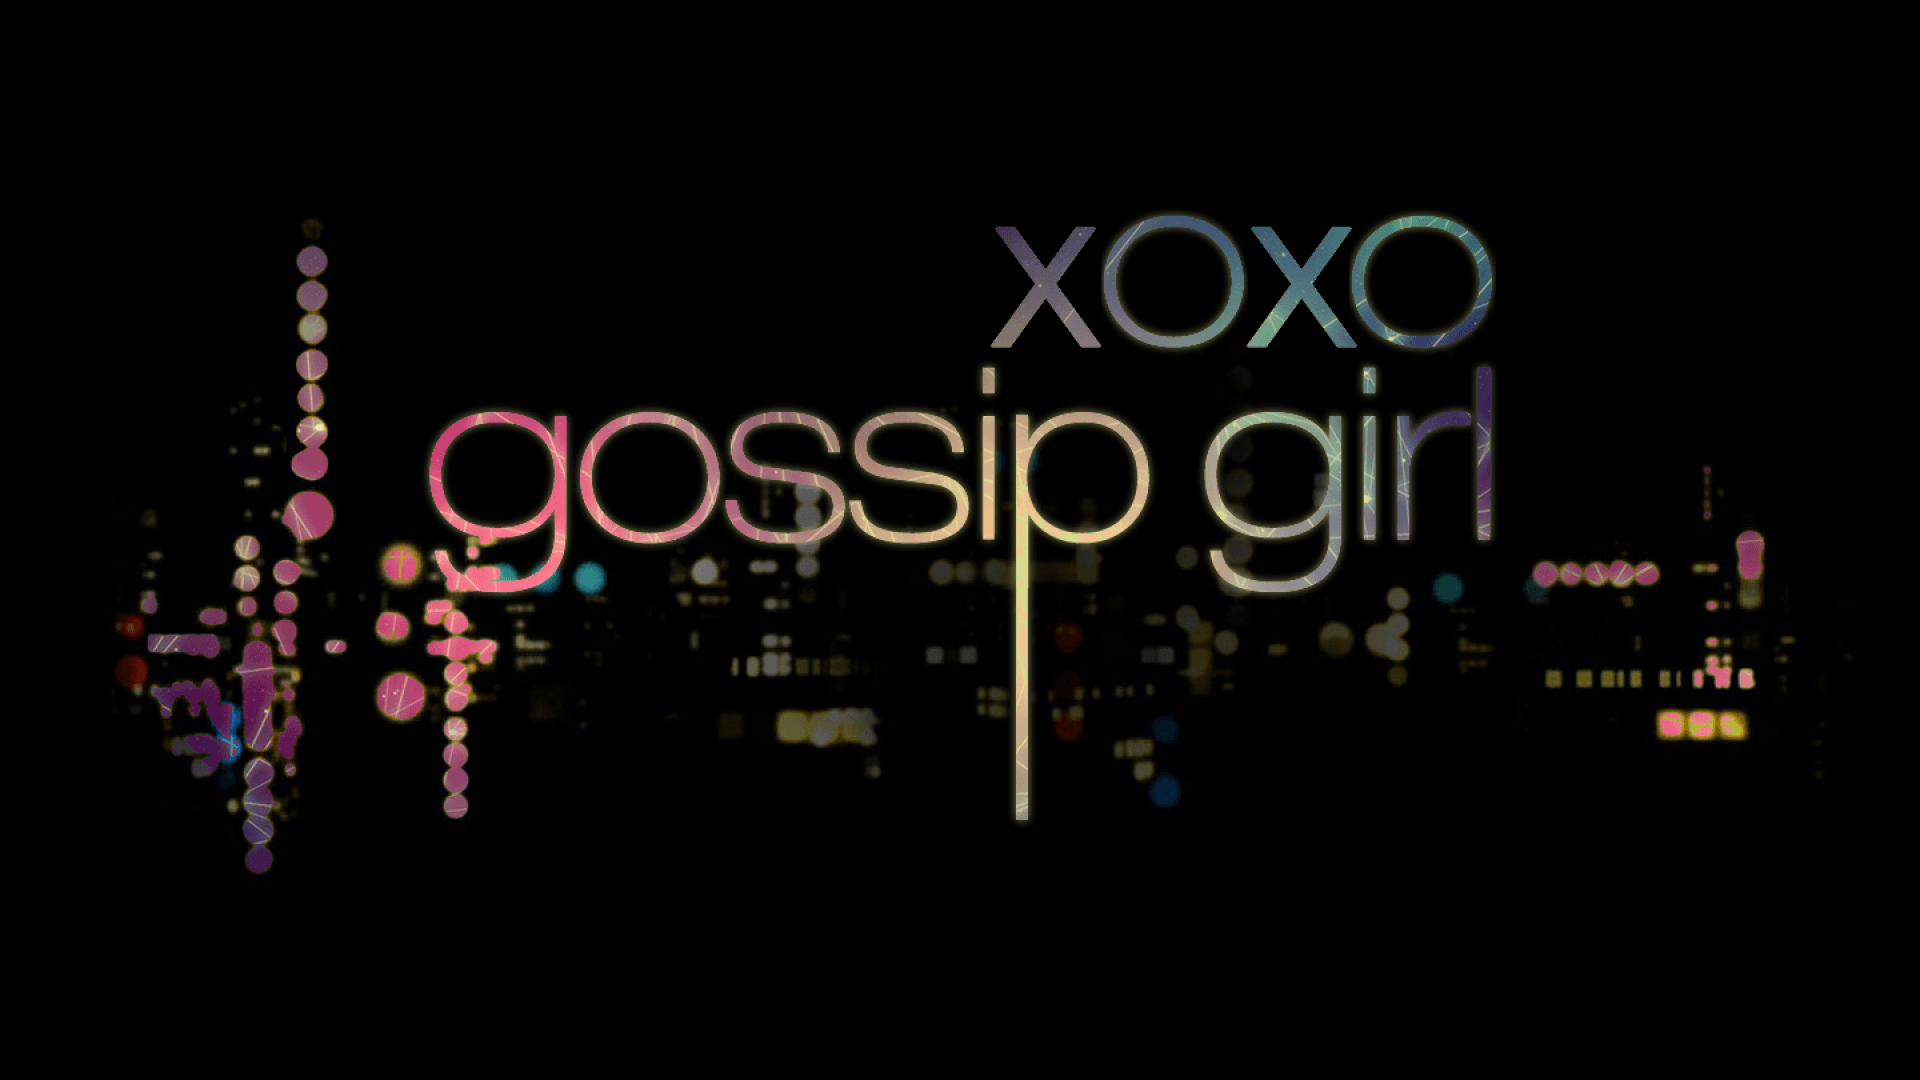 Simply: Gossip Girl xoxo desktop bakcgrounds